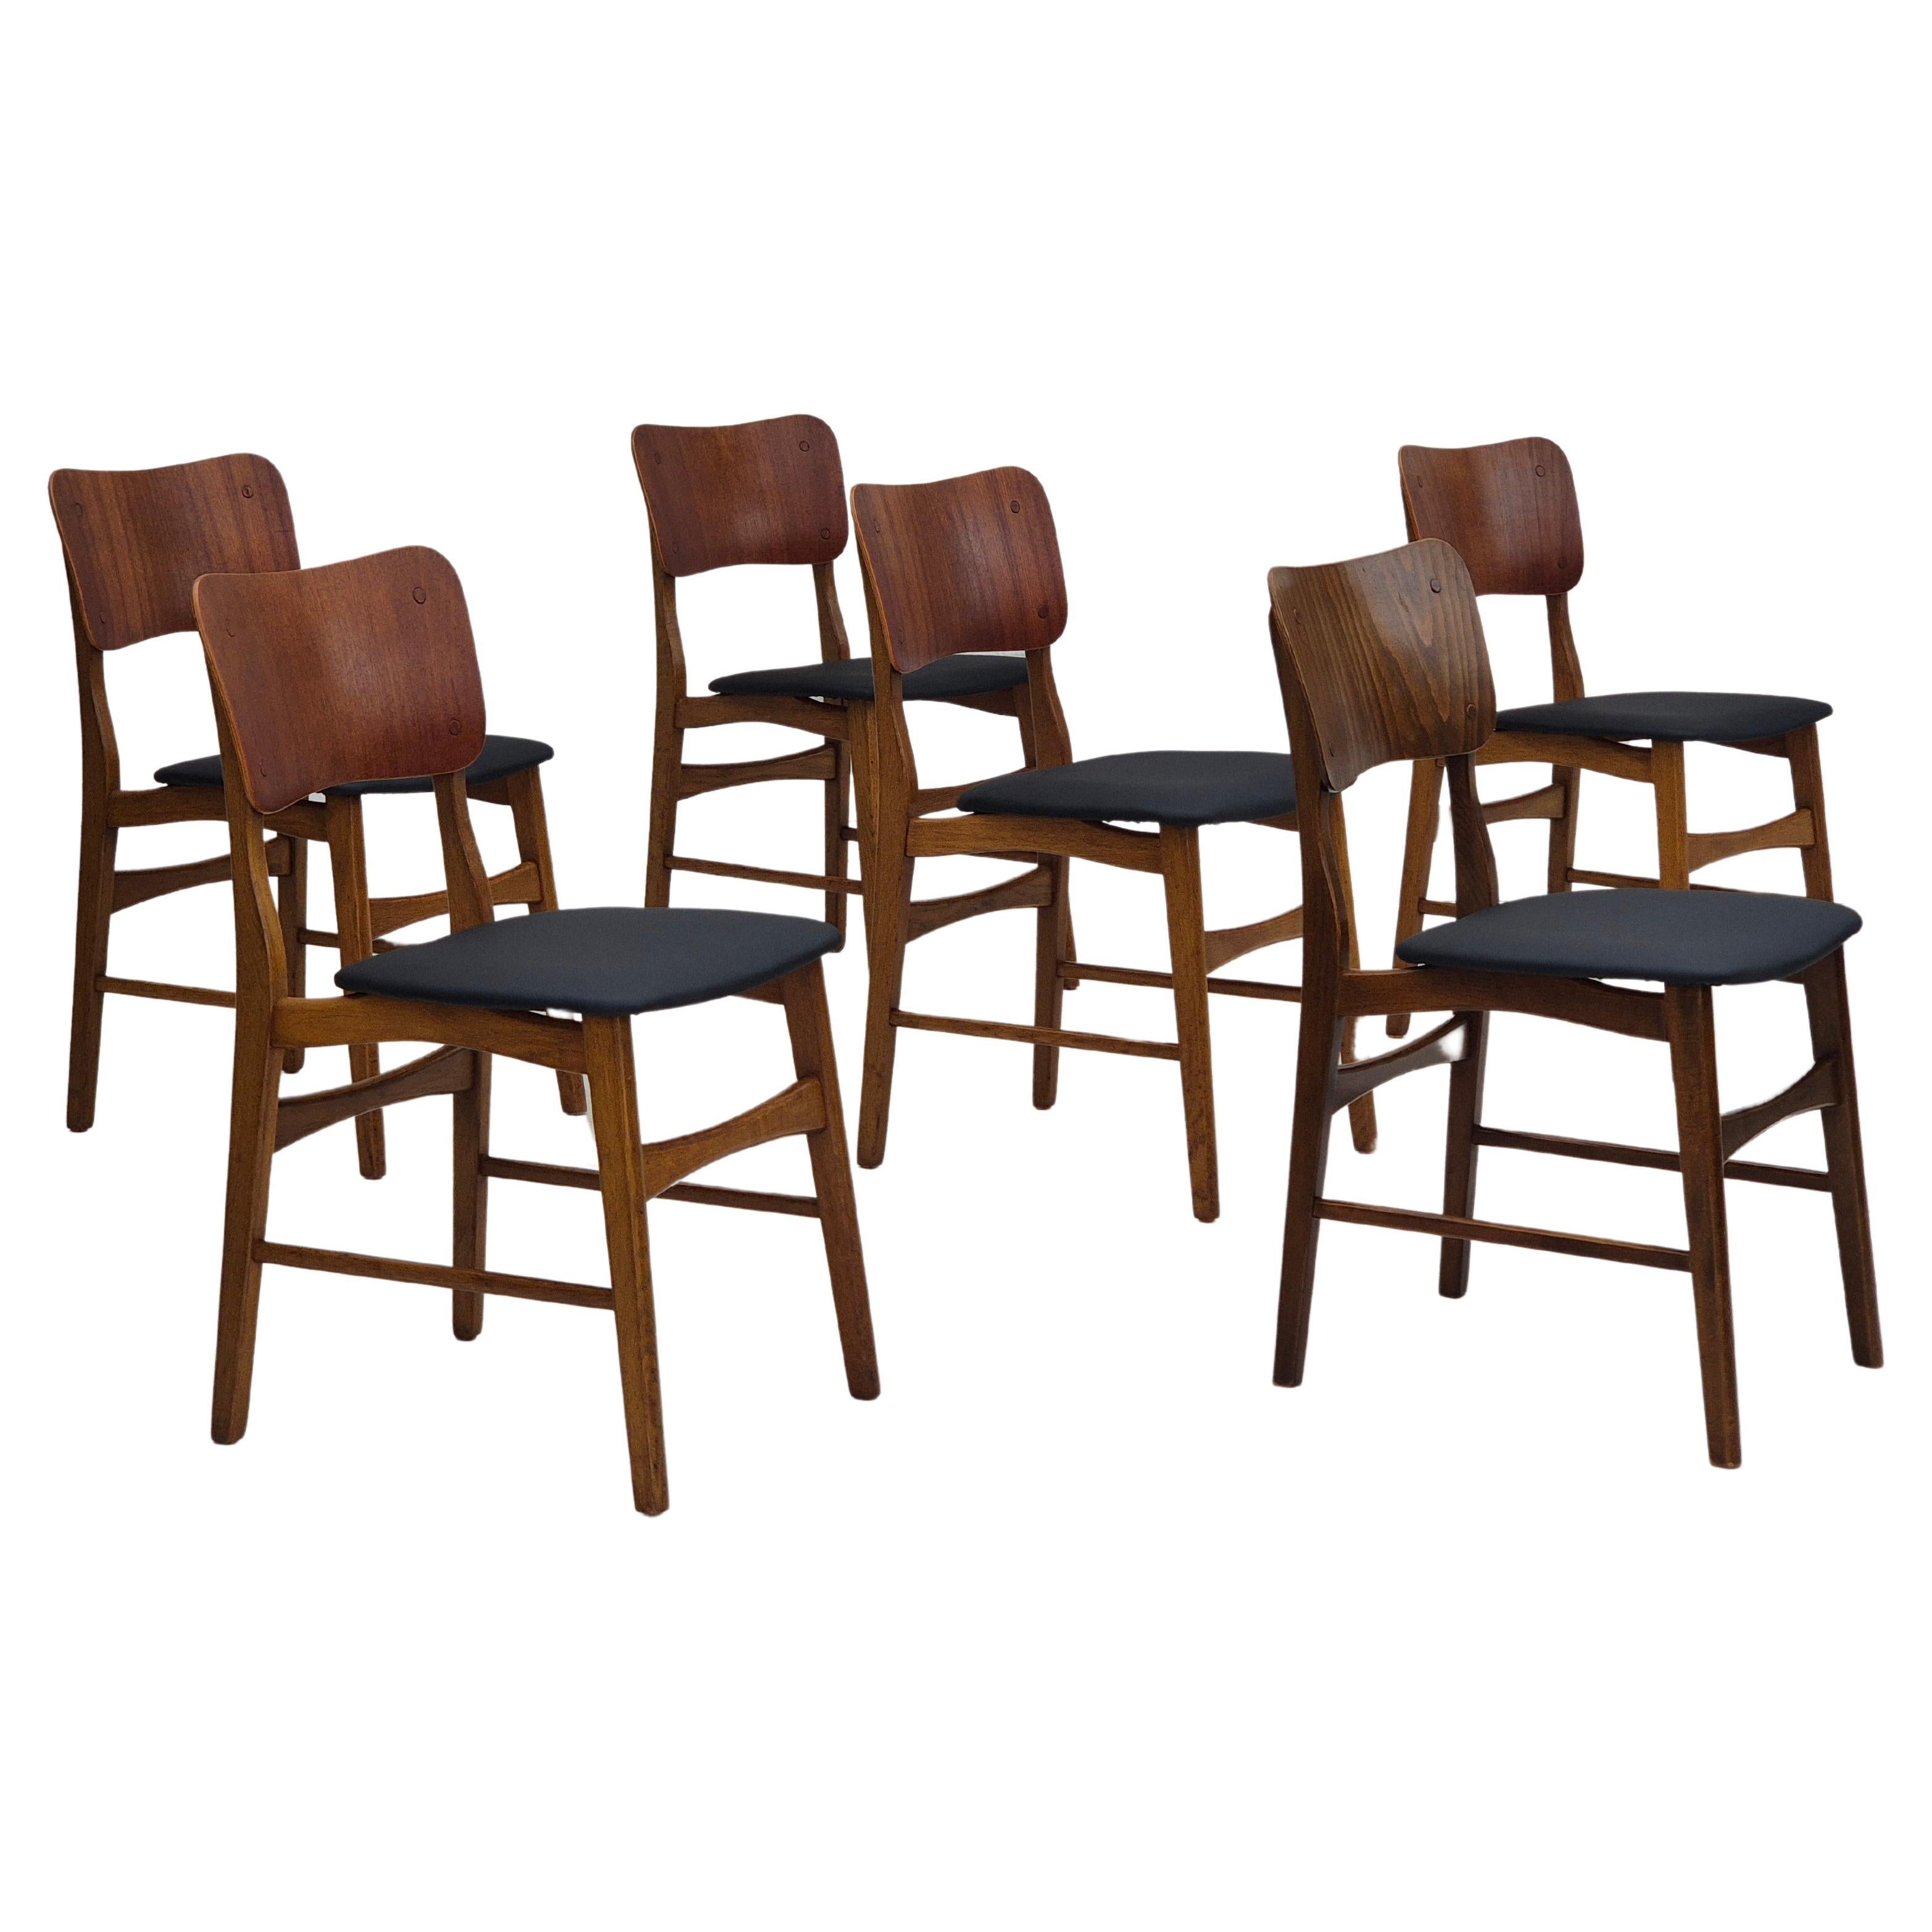 1960s, Danish design by Ib Kofod Larsen, Christensen & Larsen, set of chairs.